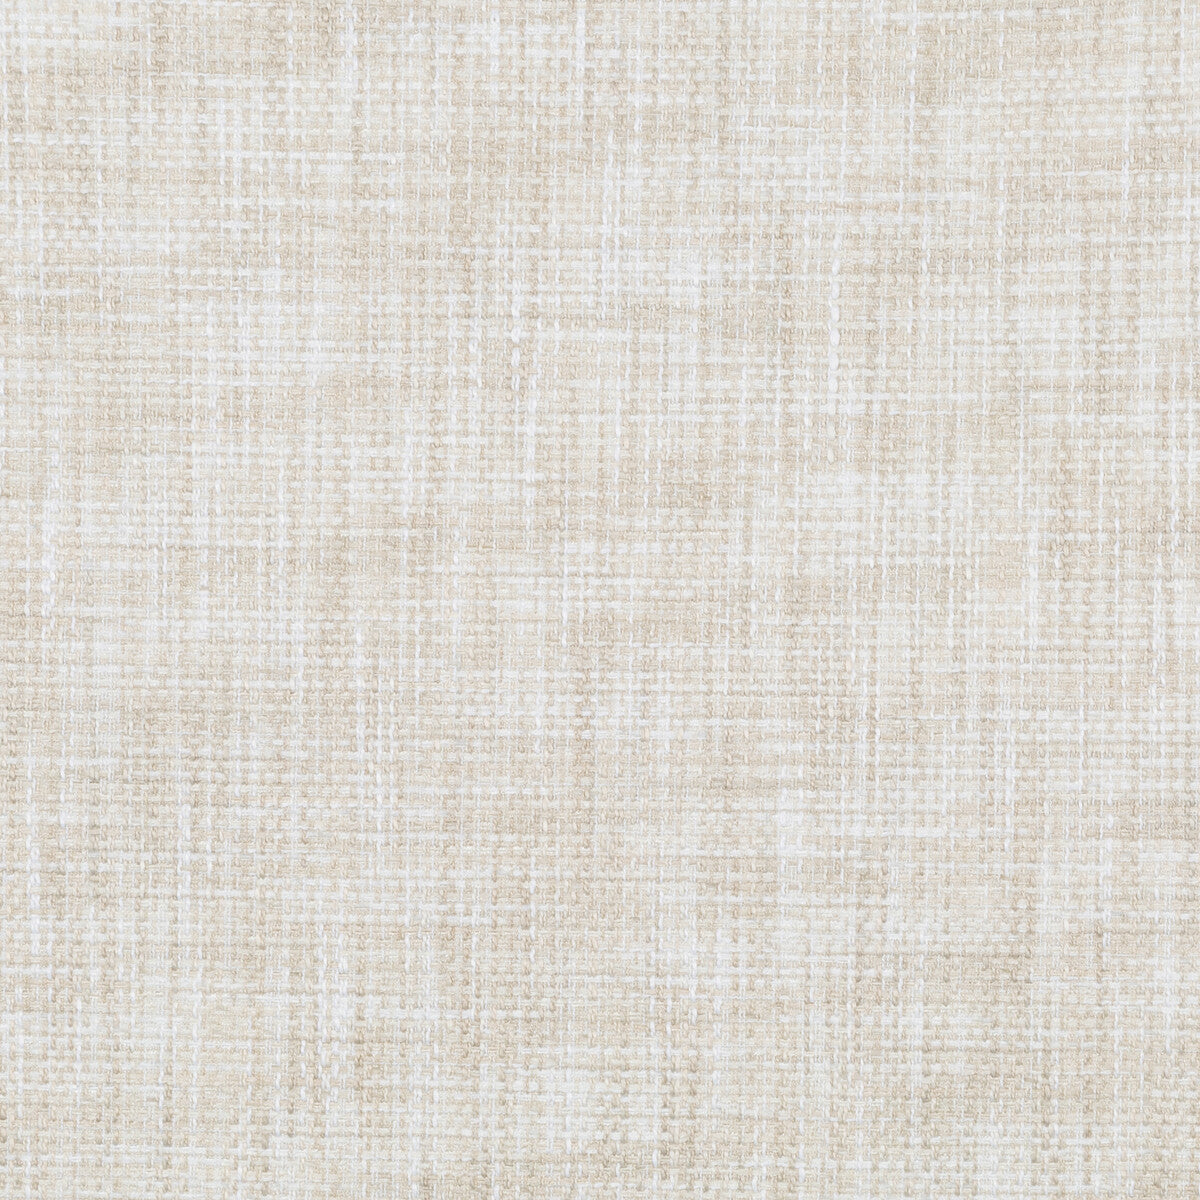 Kravet Smart fabric in 35928-116 color - pattern 35928.116.0 - by Kravet Smart in the Performance Kravetarmor collection